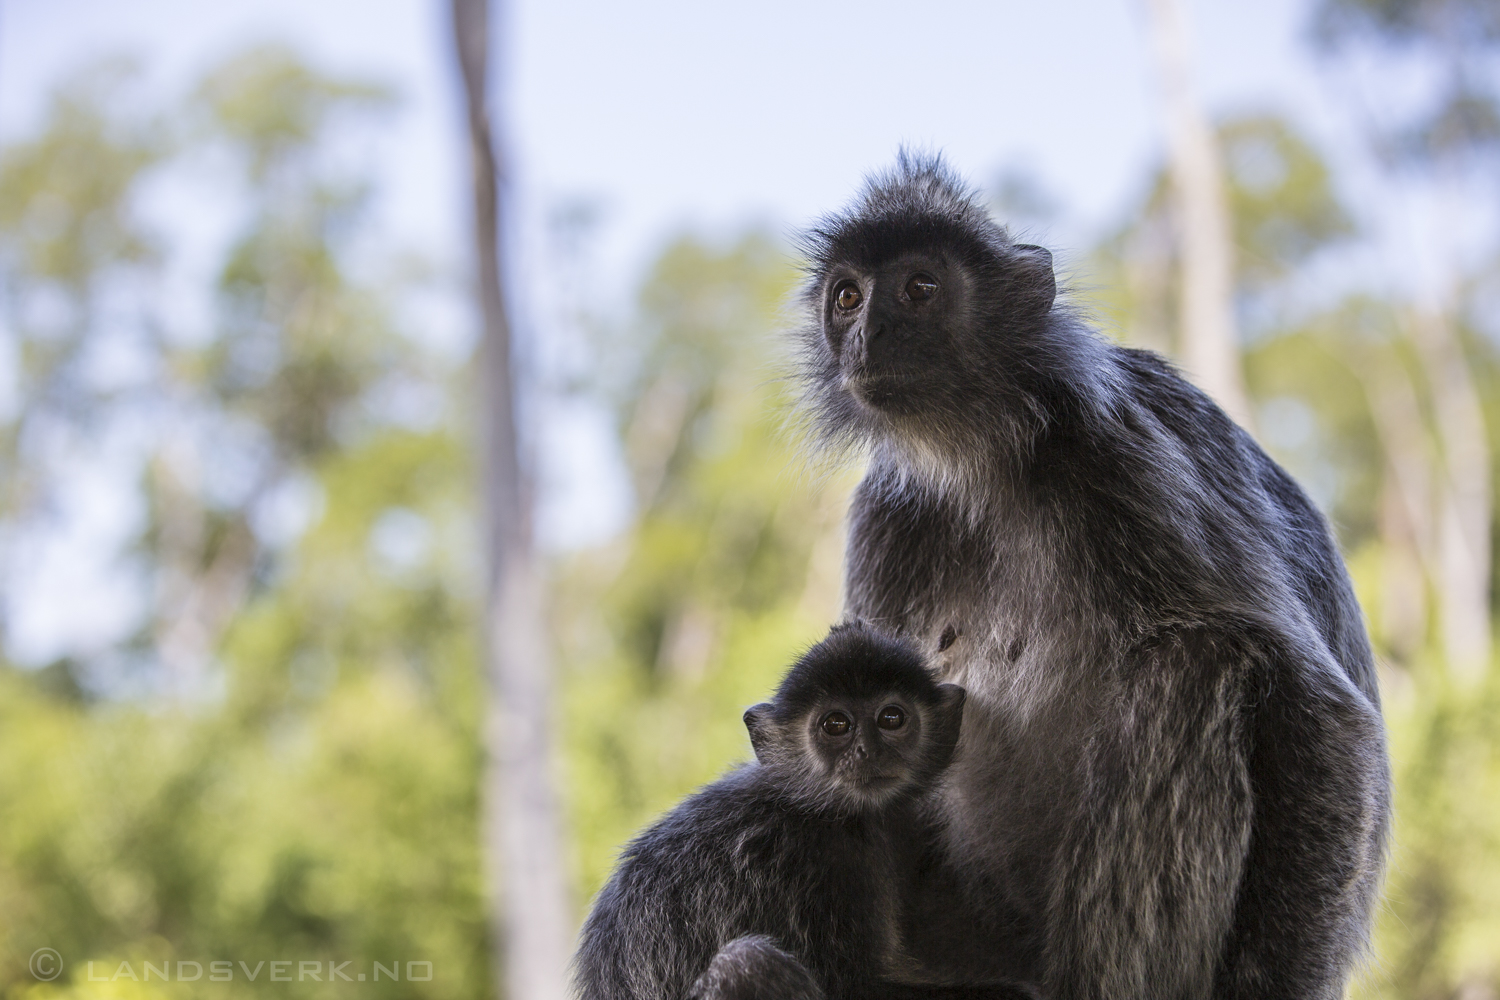 Wild Silver Leaf monkeys. Kota Kinabatangan, Borneo.

(Canon EOS 5D Mark III / Canon EF 70-200mm f/2.8 L IS II USM)